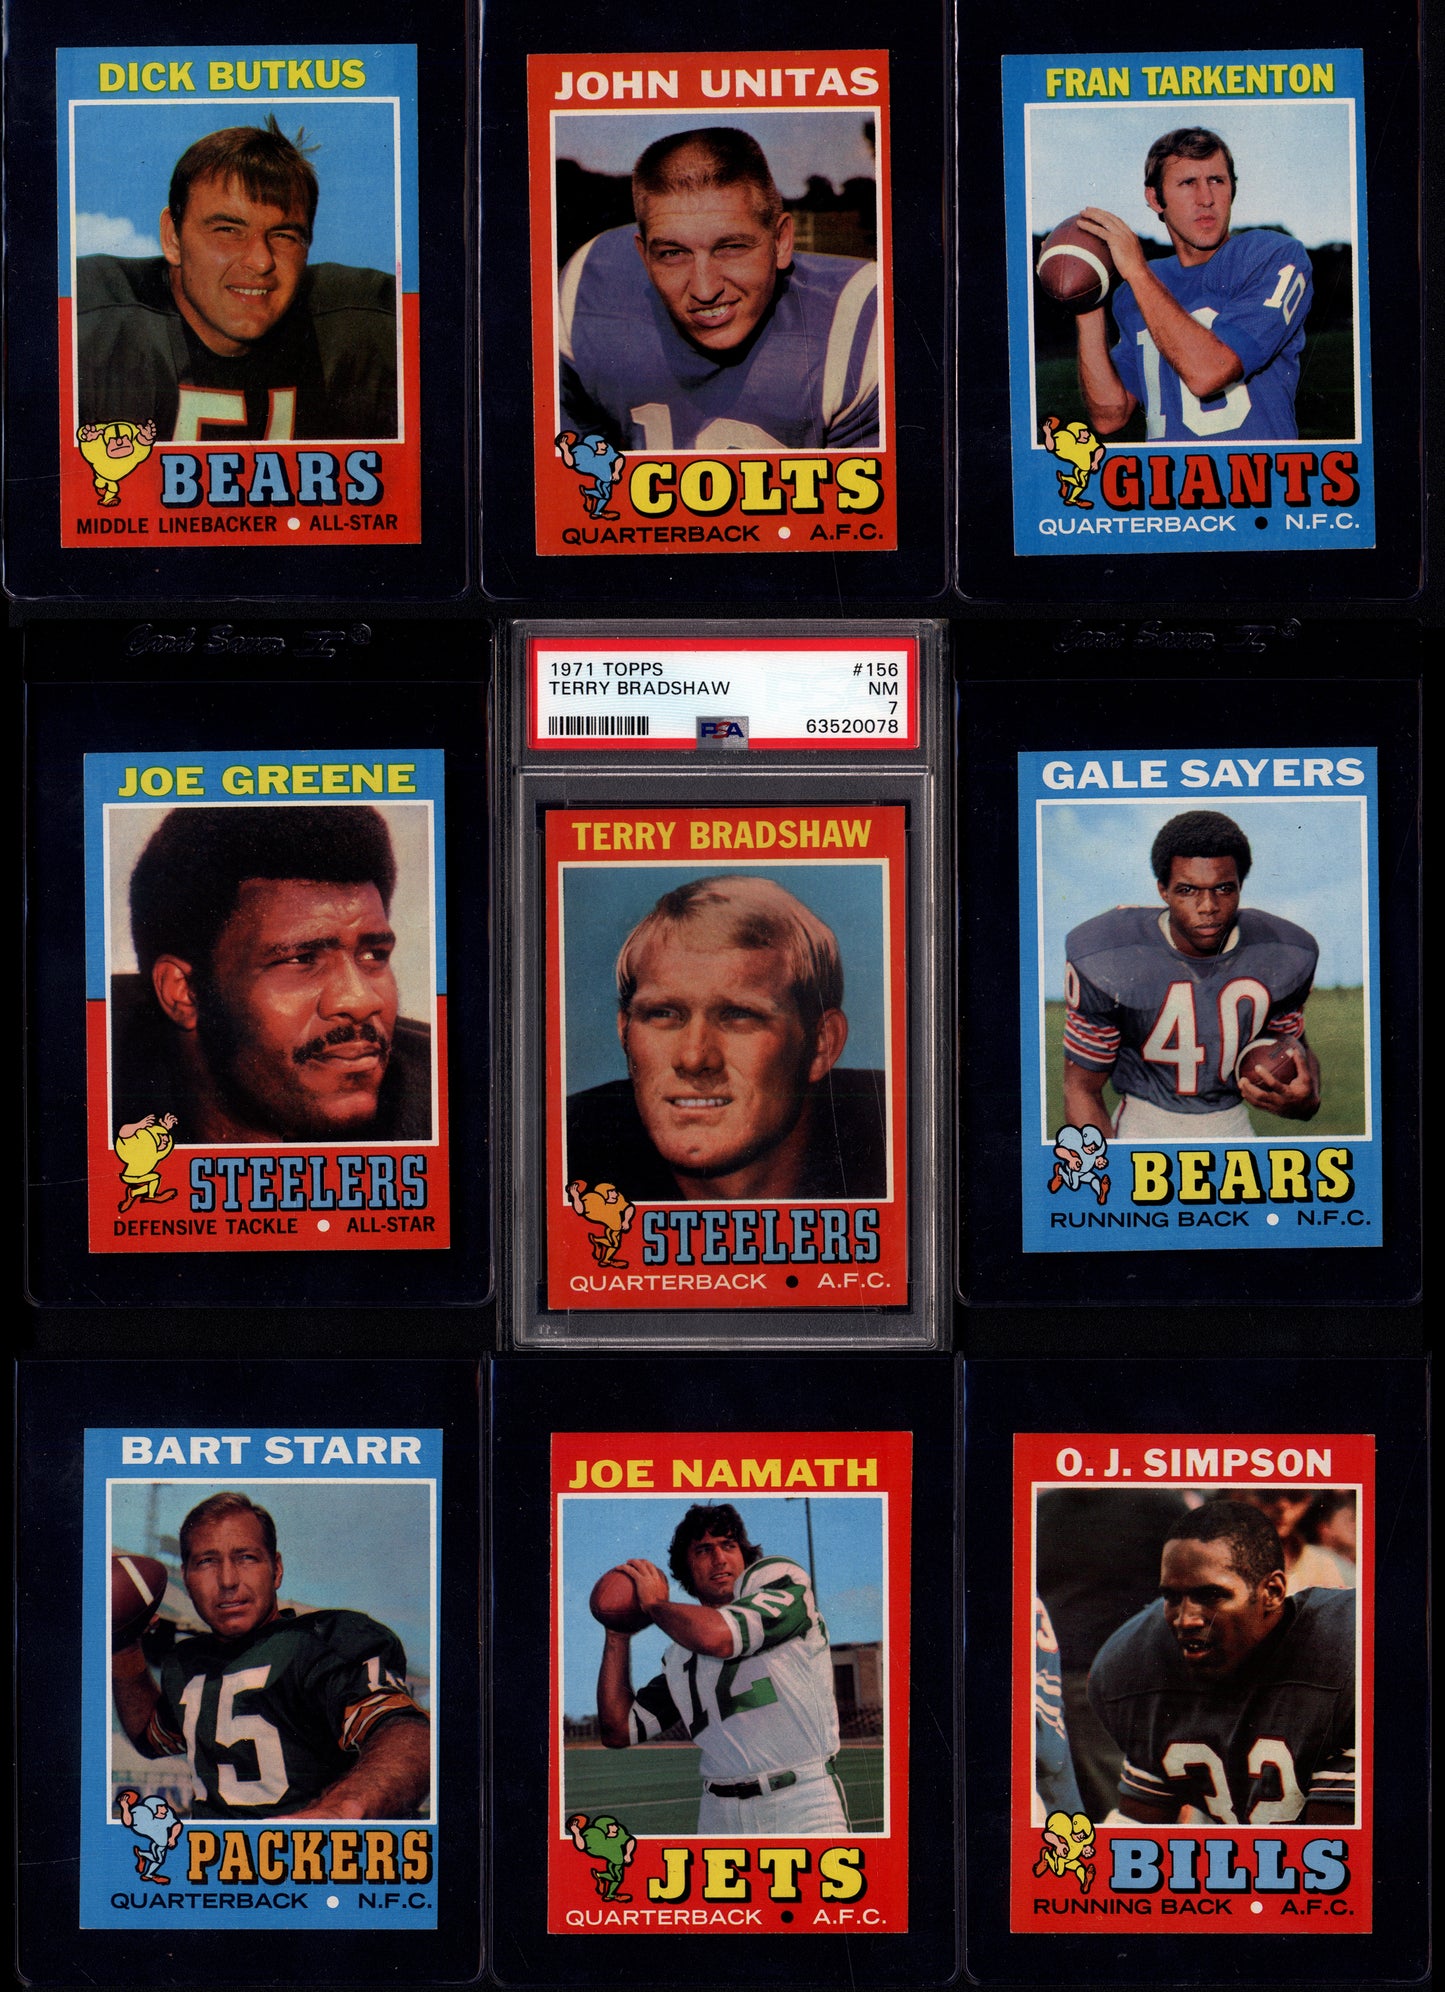 1971 Topps Football Set Break 263 Spot Random Card (Terry Bradshaw Rookie PSA 7, etc!)